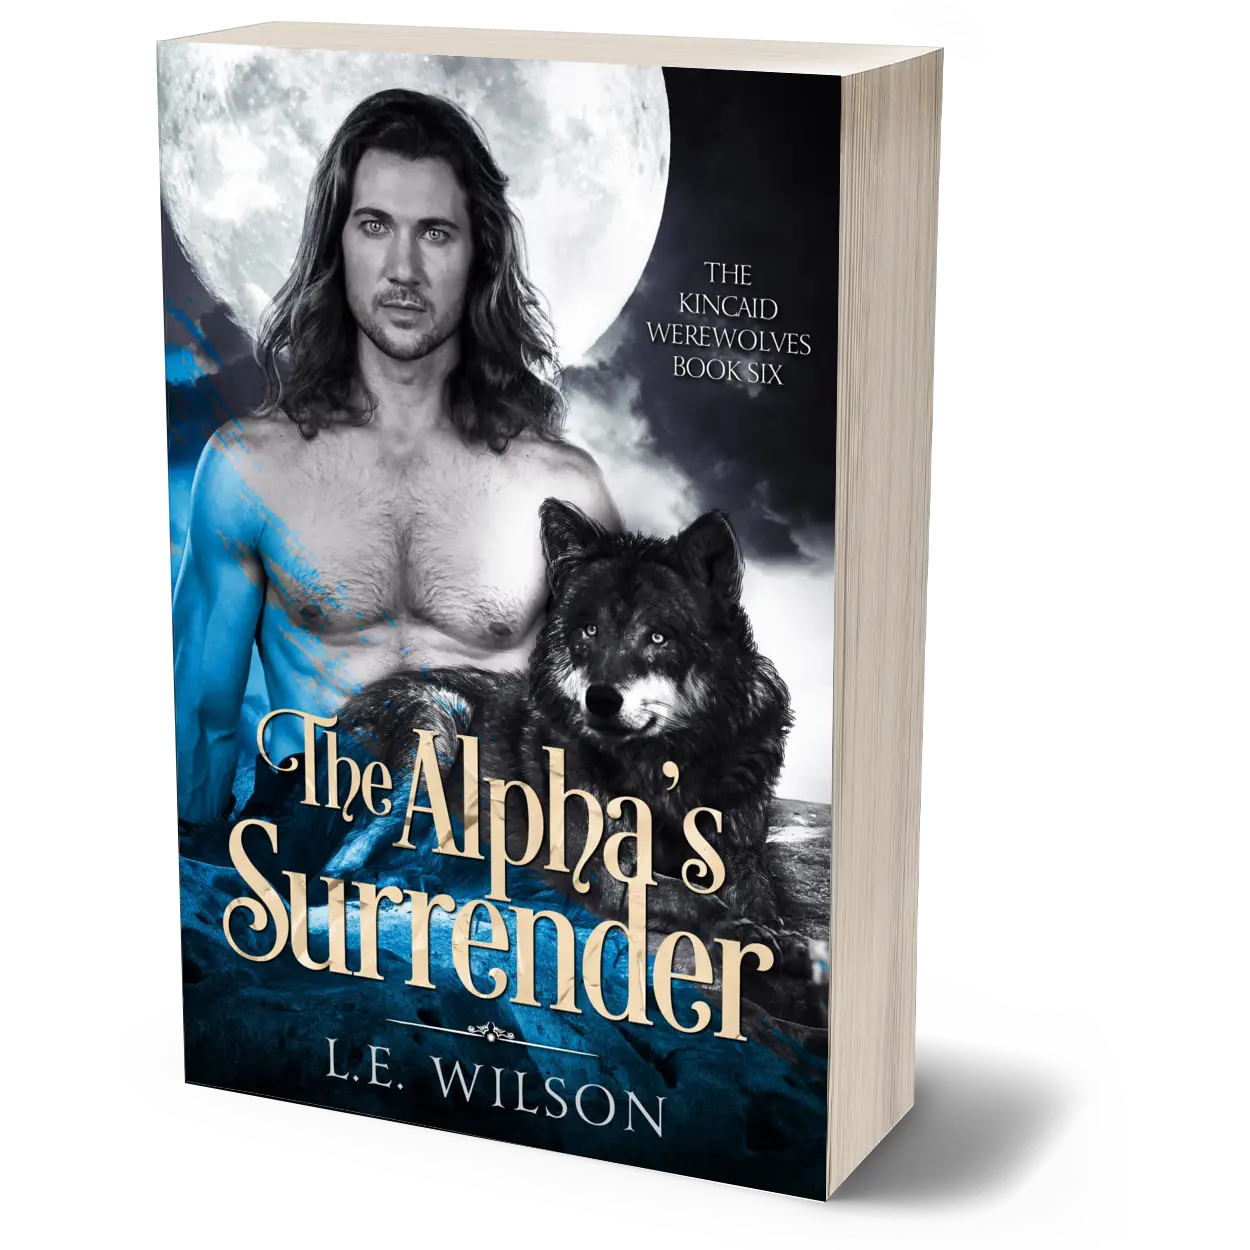 The Alphas Surrender Paperback